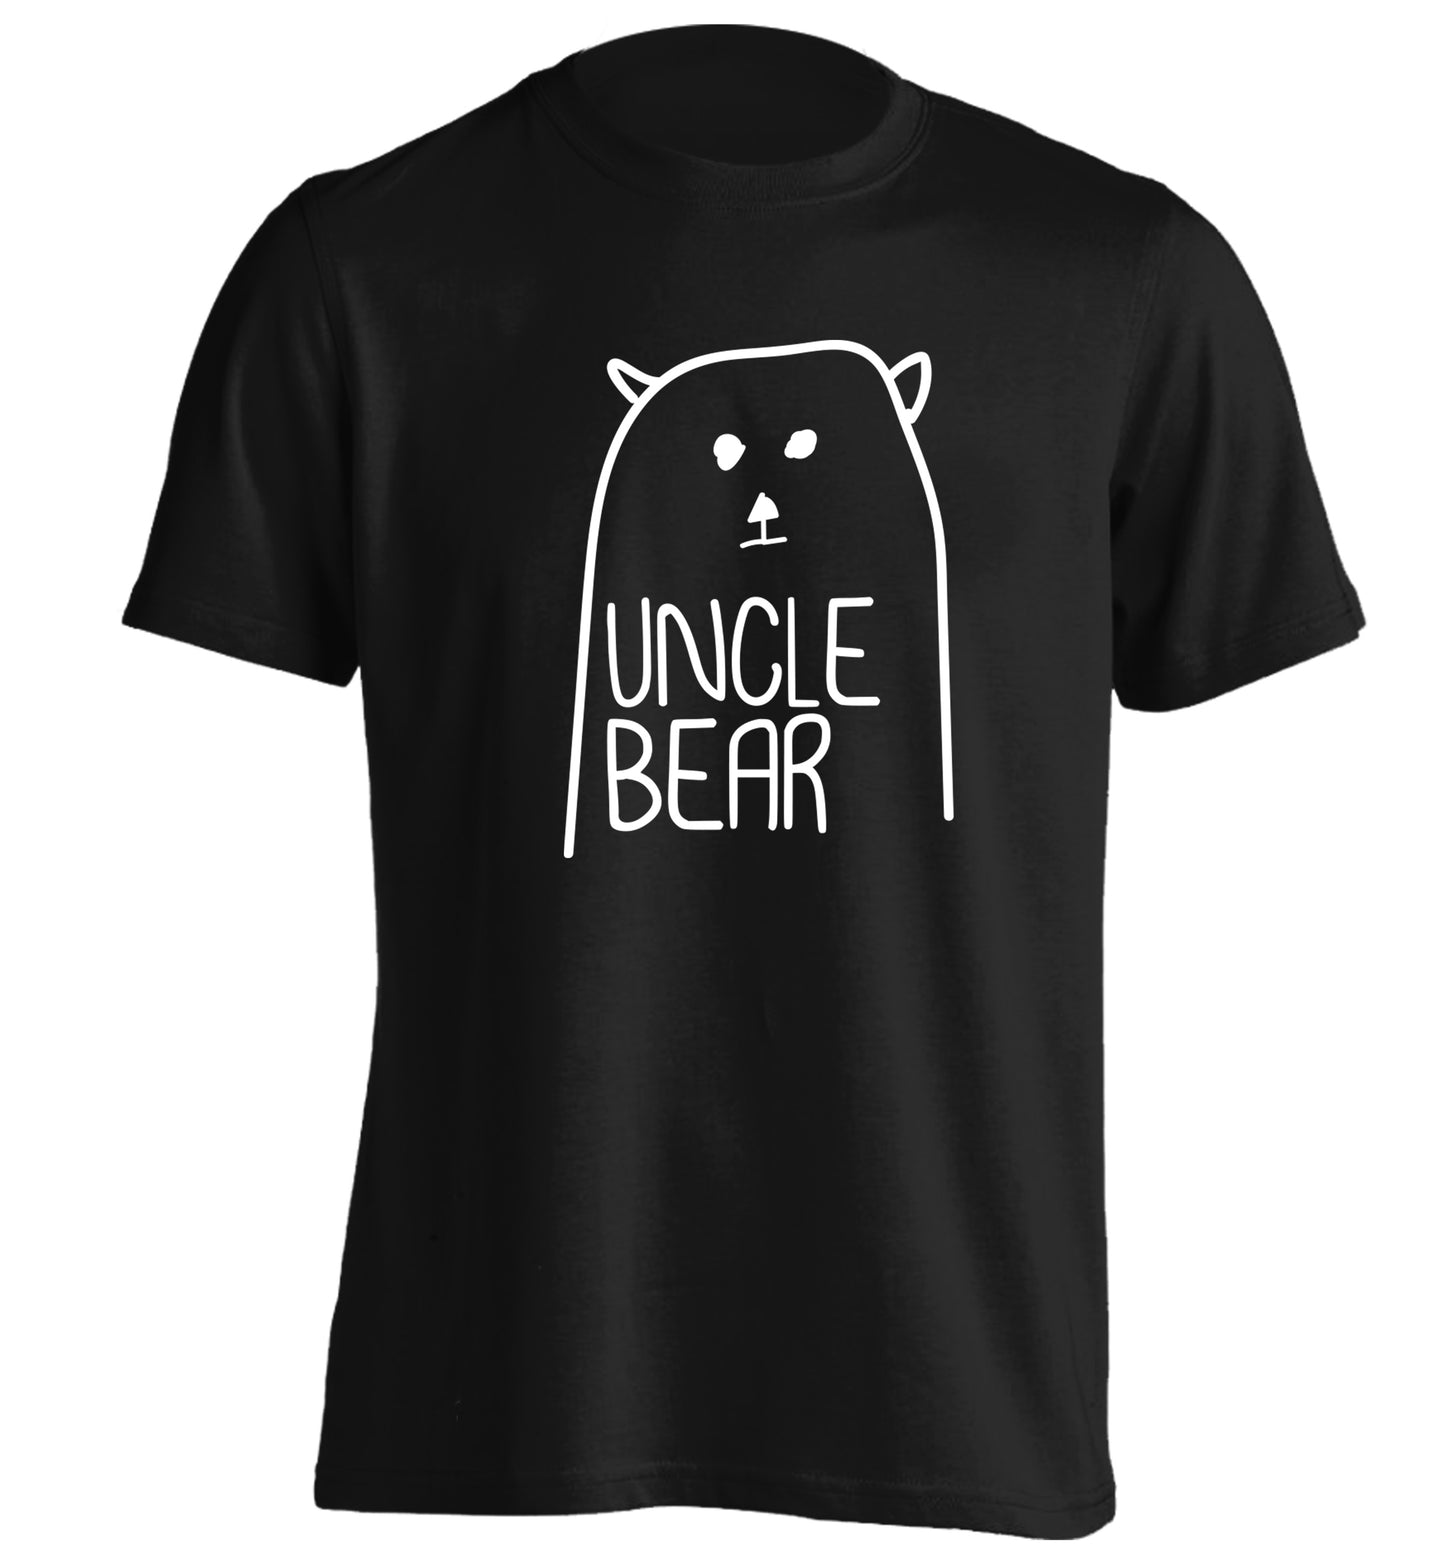 Uncle bear adults unisex black Tshirt 2XL